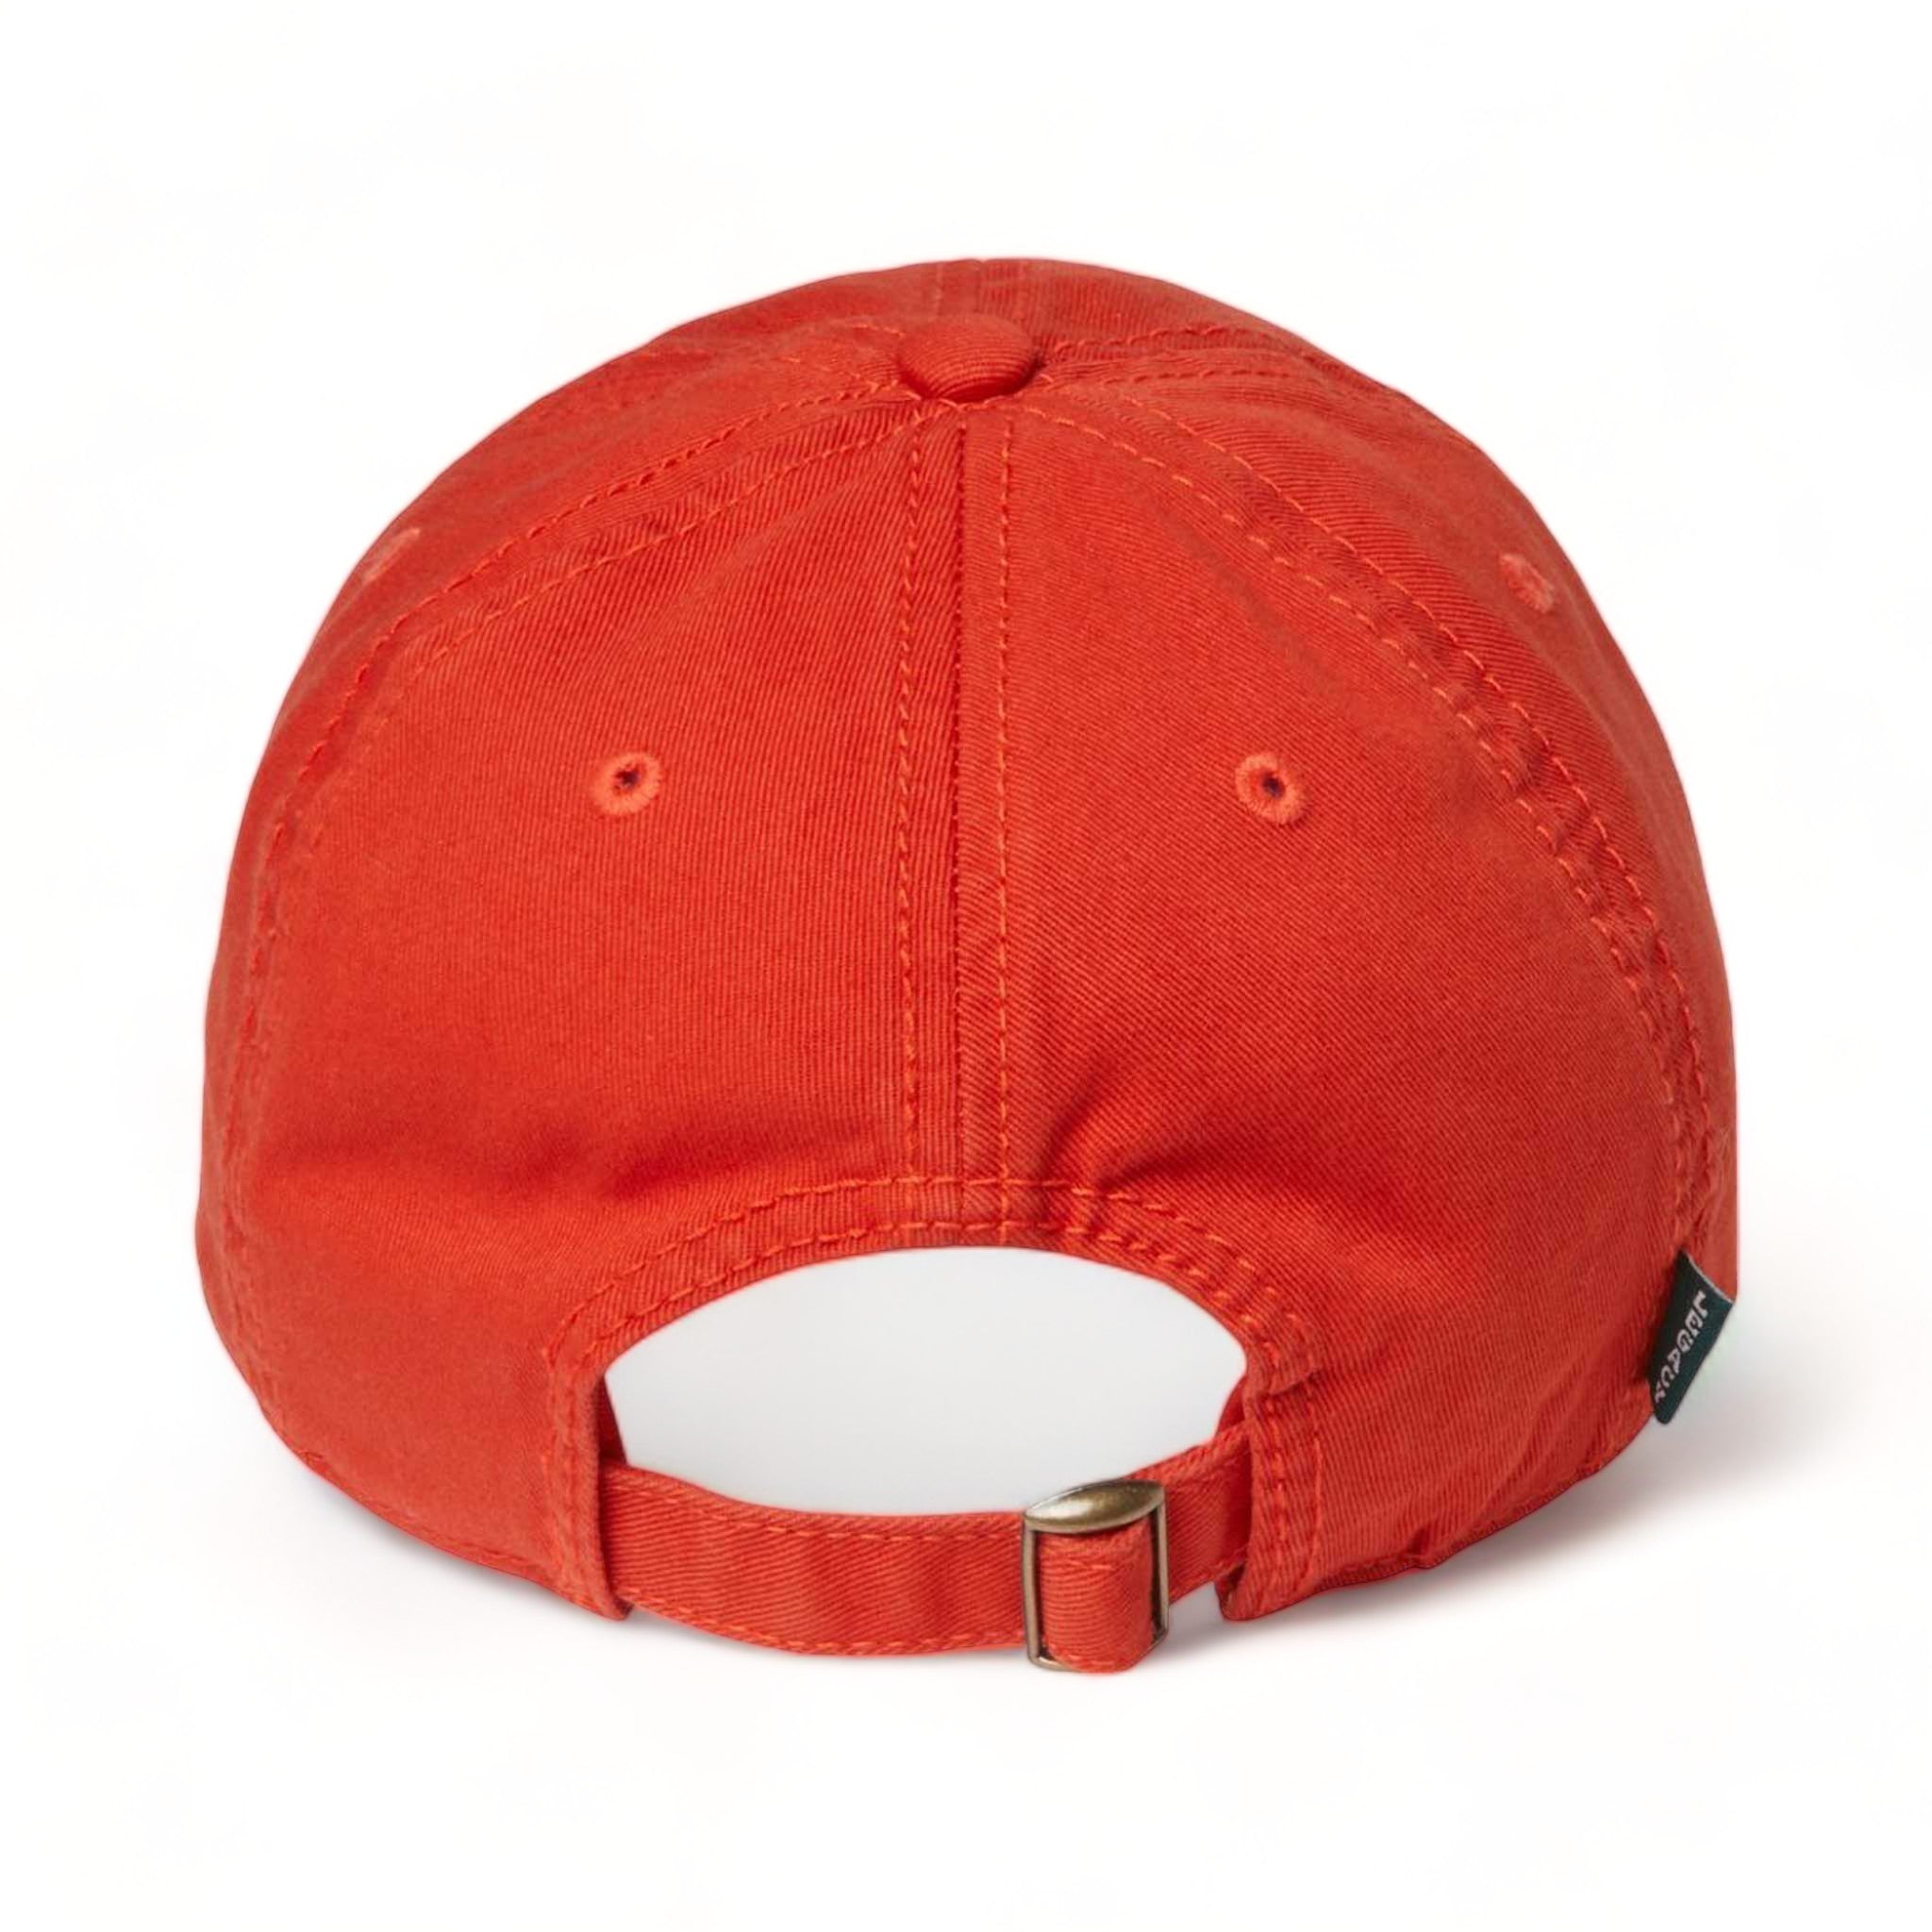 Back view of LEGACY EZA custom hat in mandarin orange